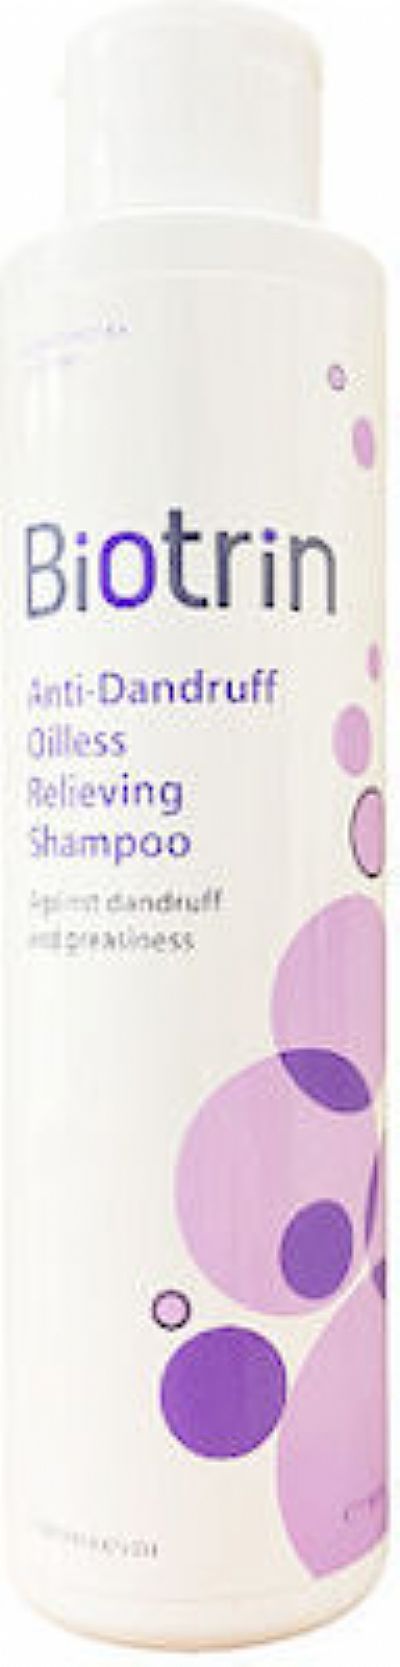 Biotrin Anti-Dandruff Oilless Relieving Shampoo, Σαμπουάν Κατά Της Πιτυρίδας & Της Λιπαρότητας 150ml.